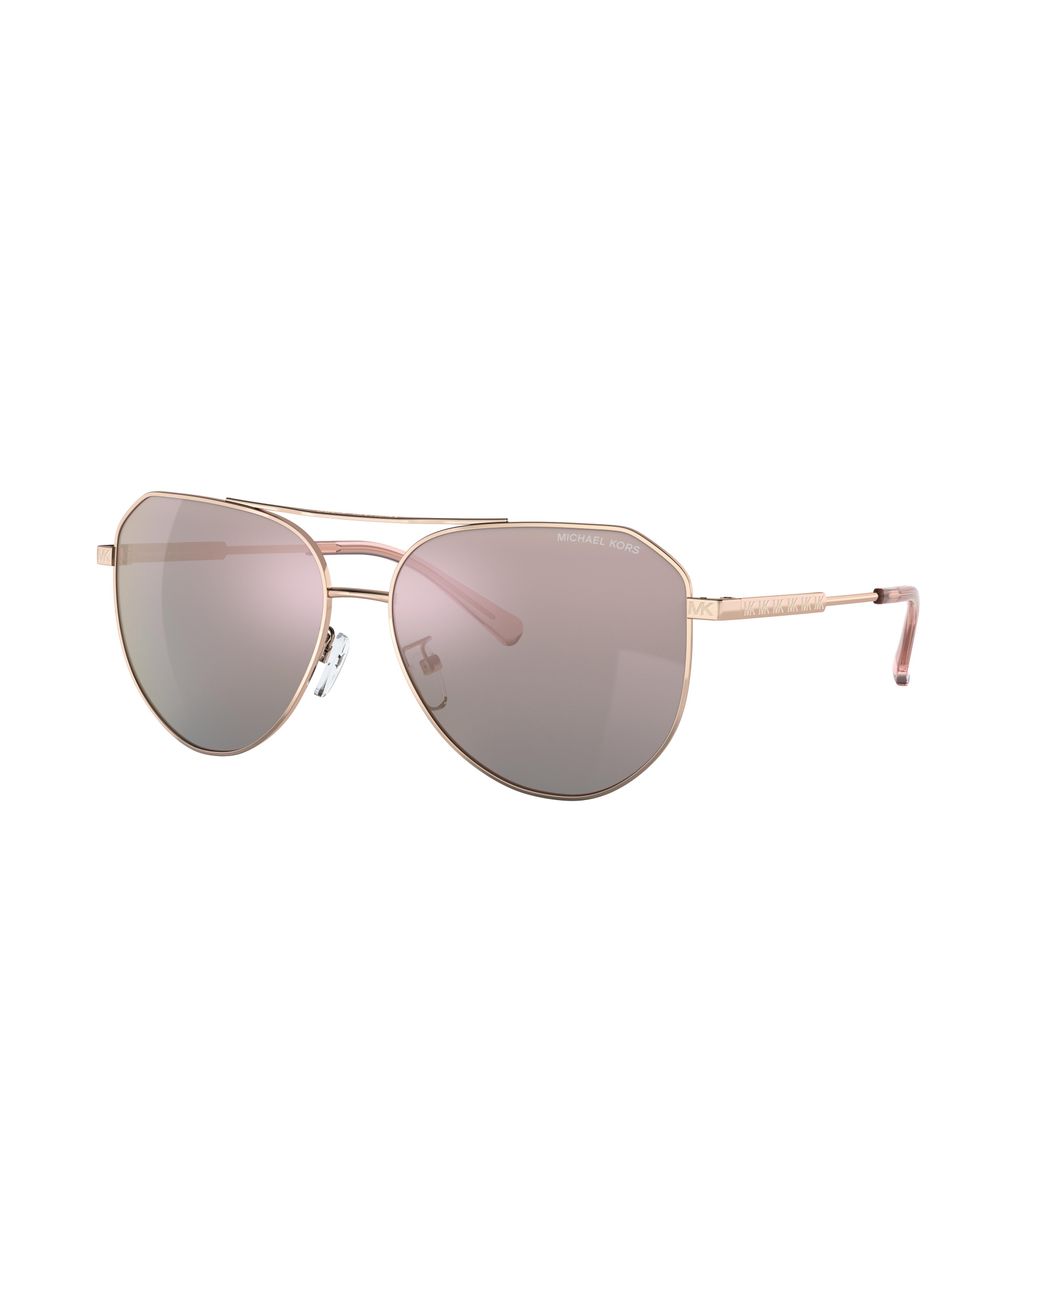 Michael Kors Cheyenne Sunglasses | Lyst